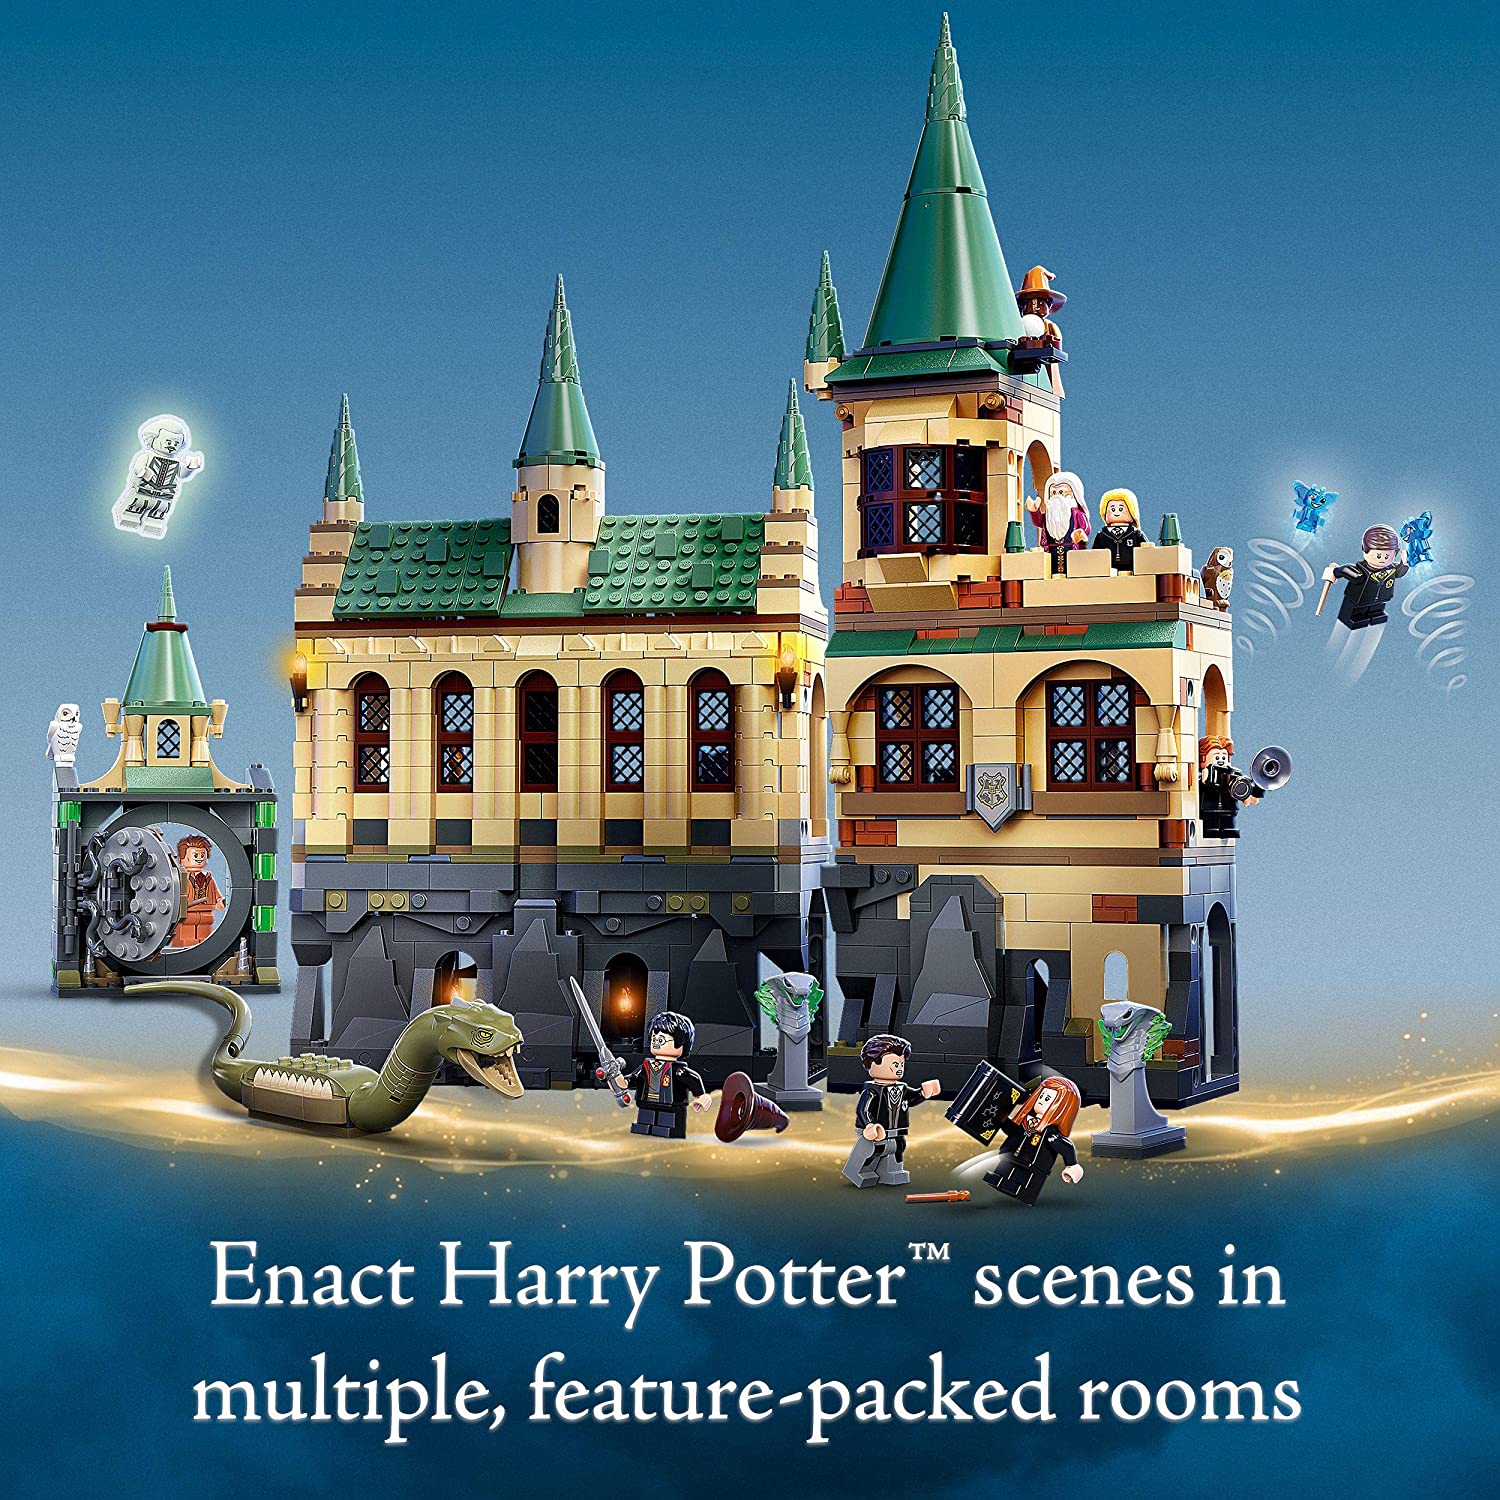 Lego 76389 Hogwarts Chamber of Secrets